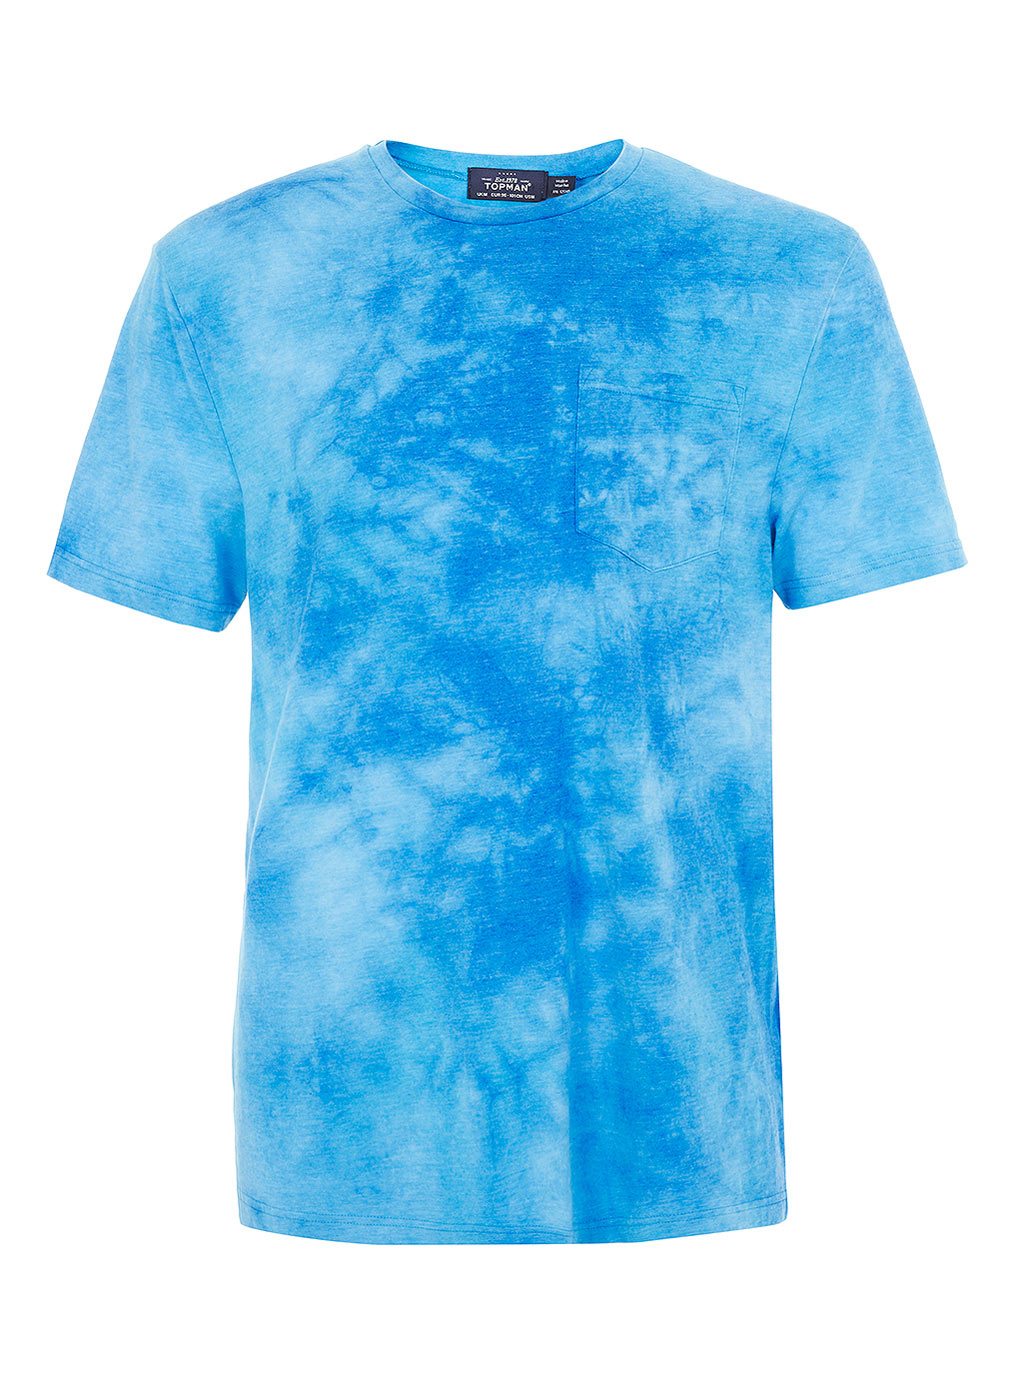 Topman-Tie-Dye-T-shirt-Blue